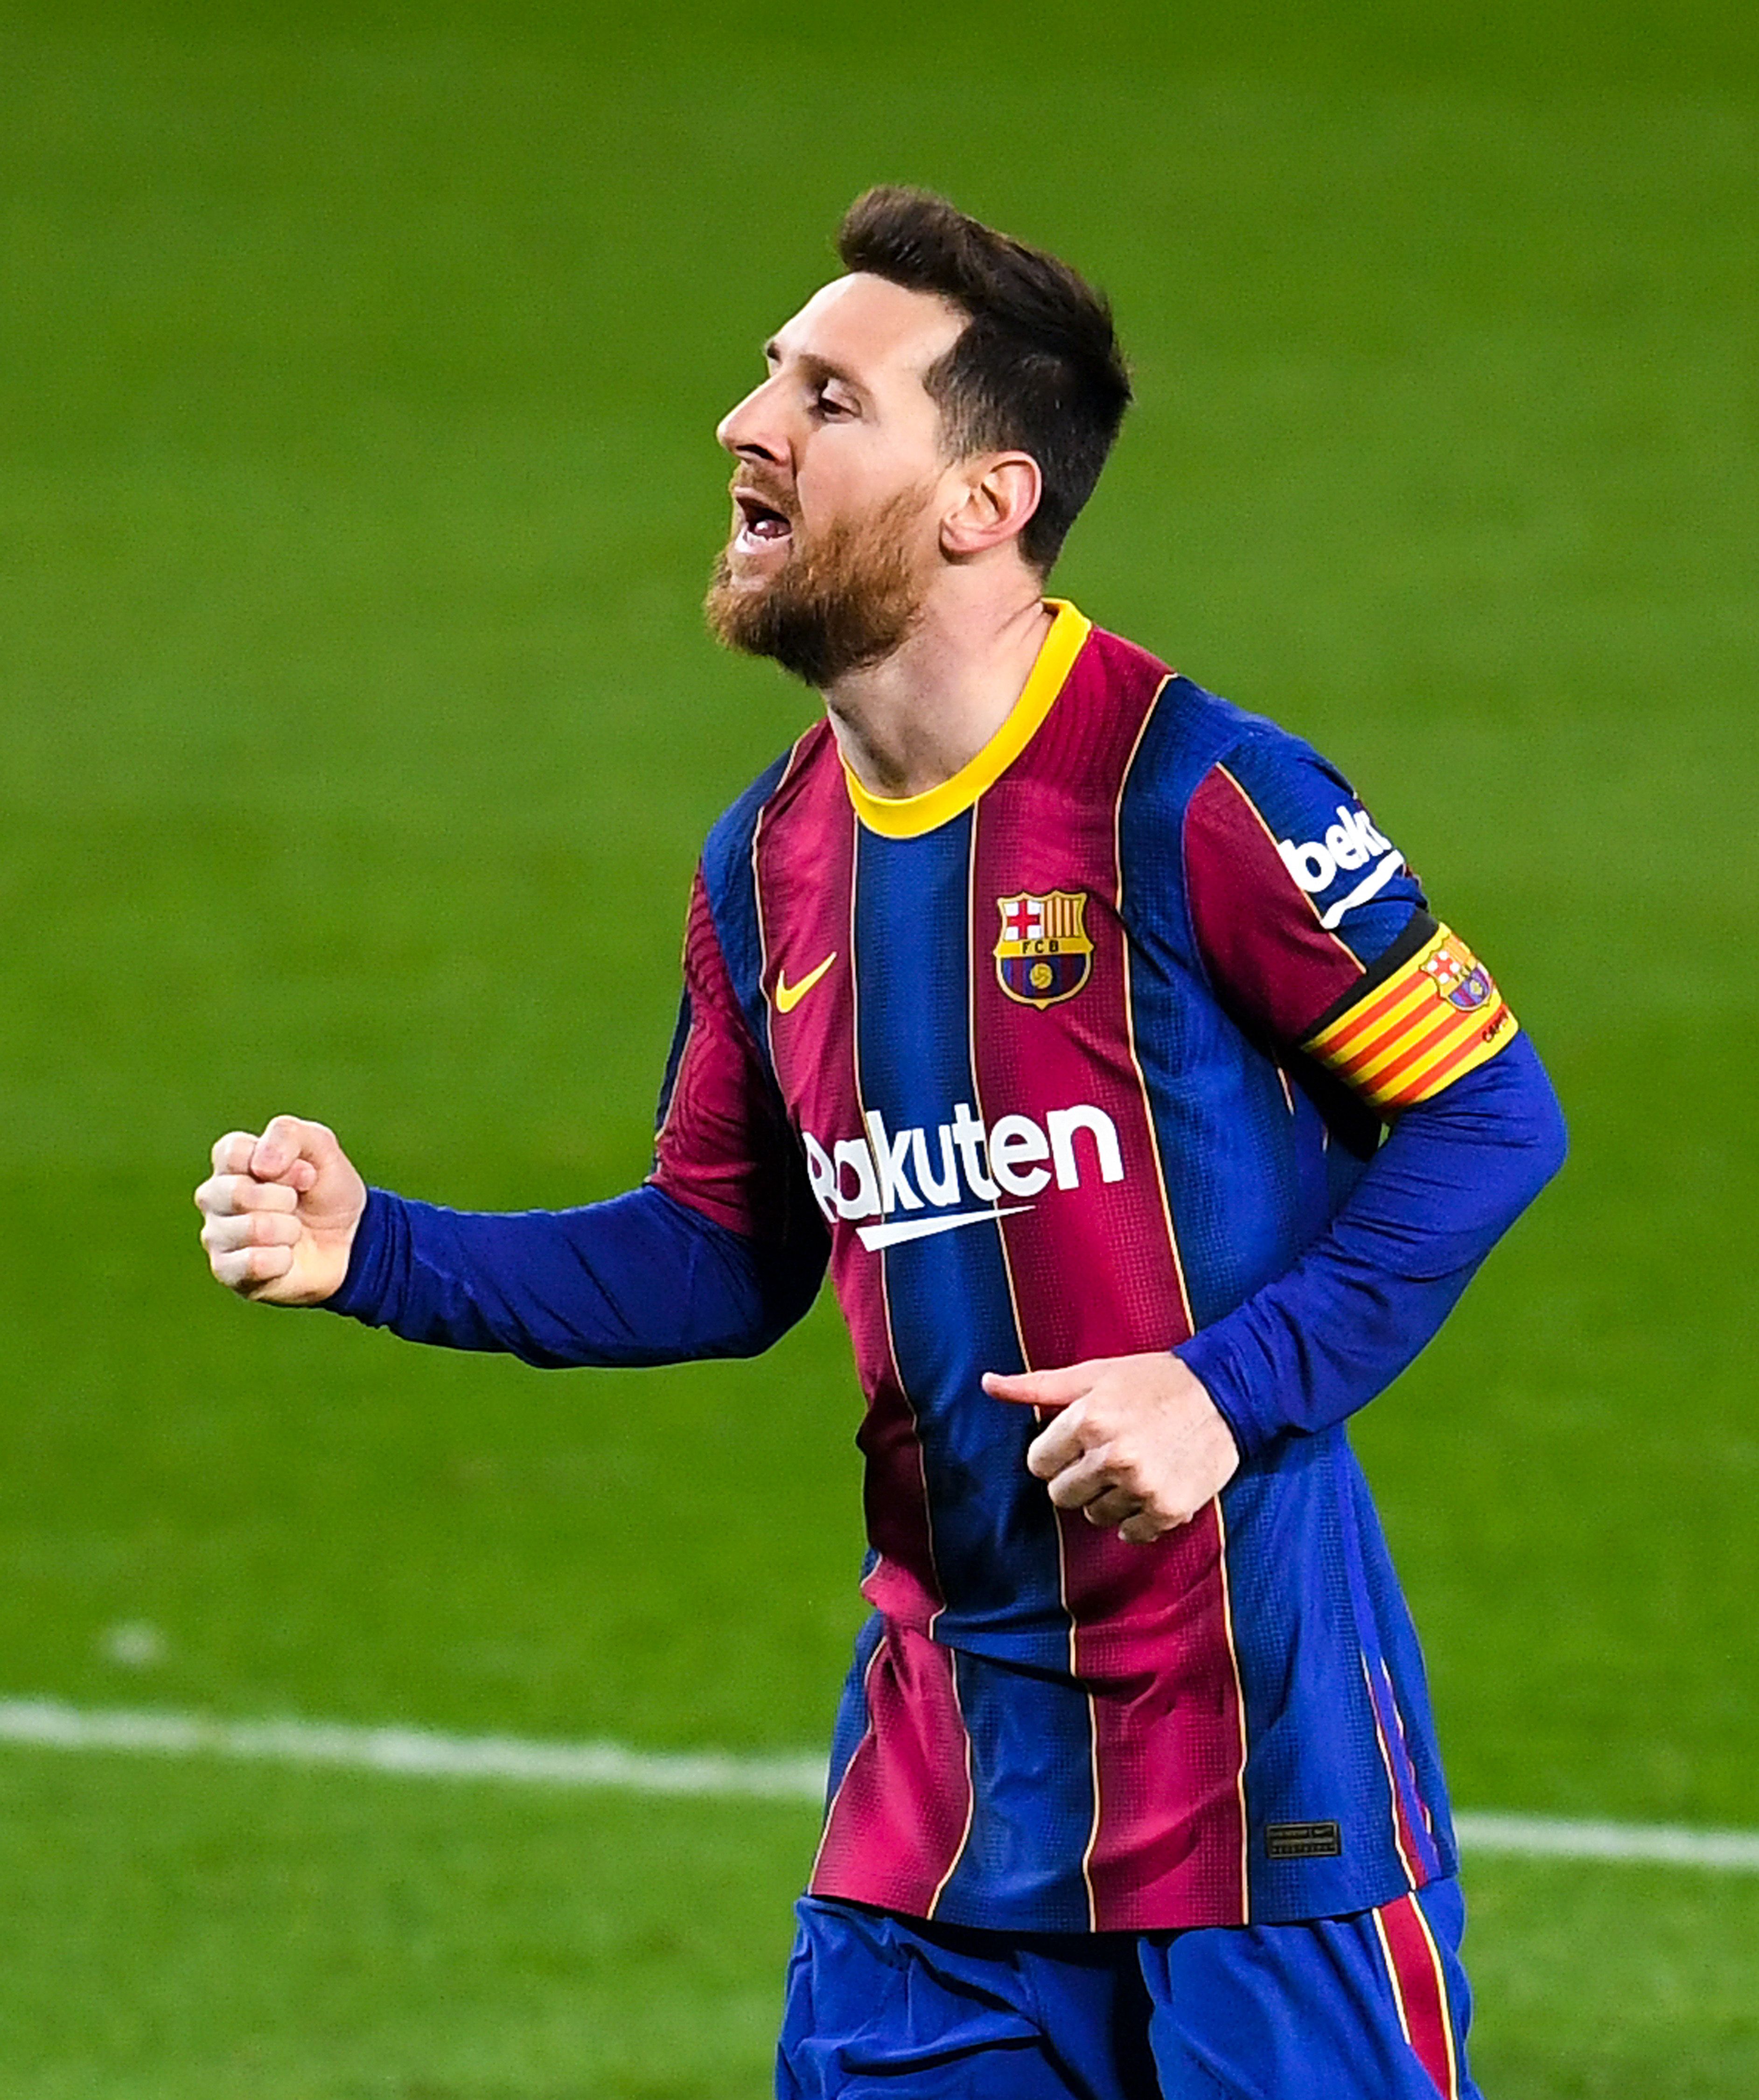 Lionel Messi celebrating a goal